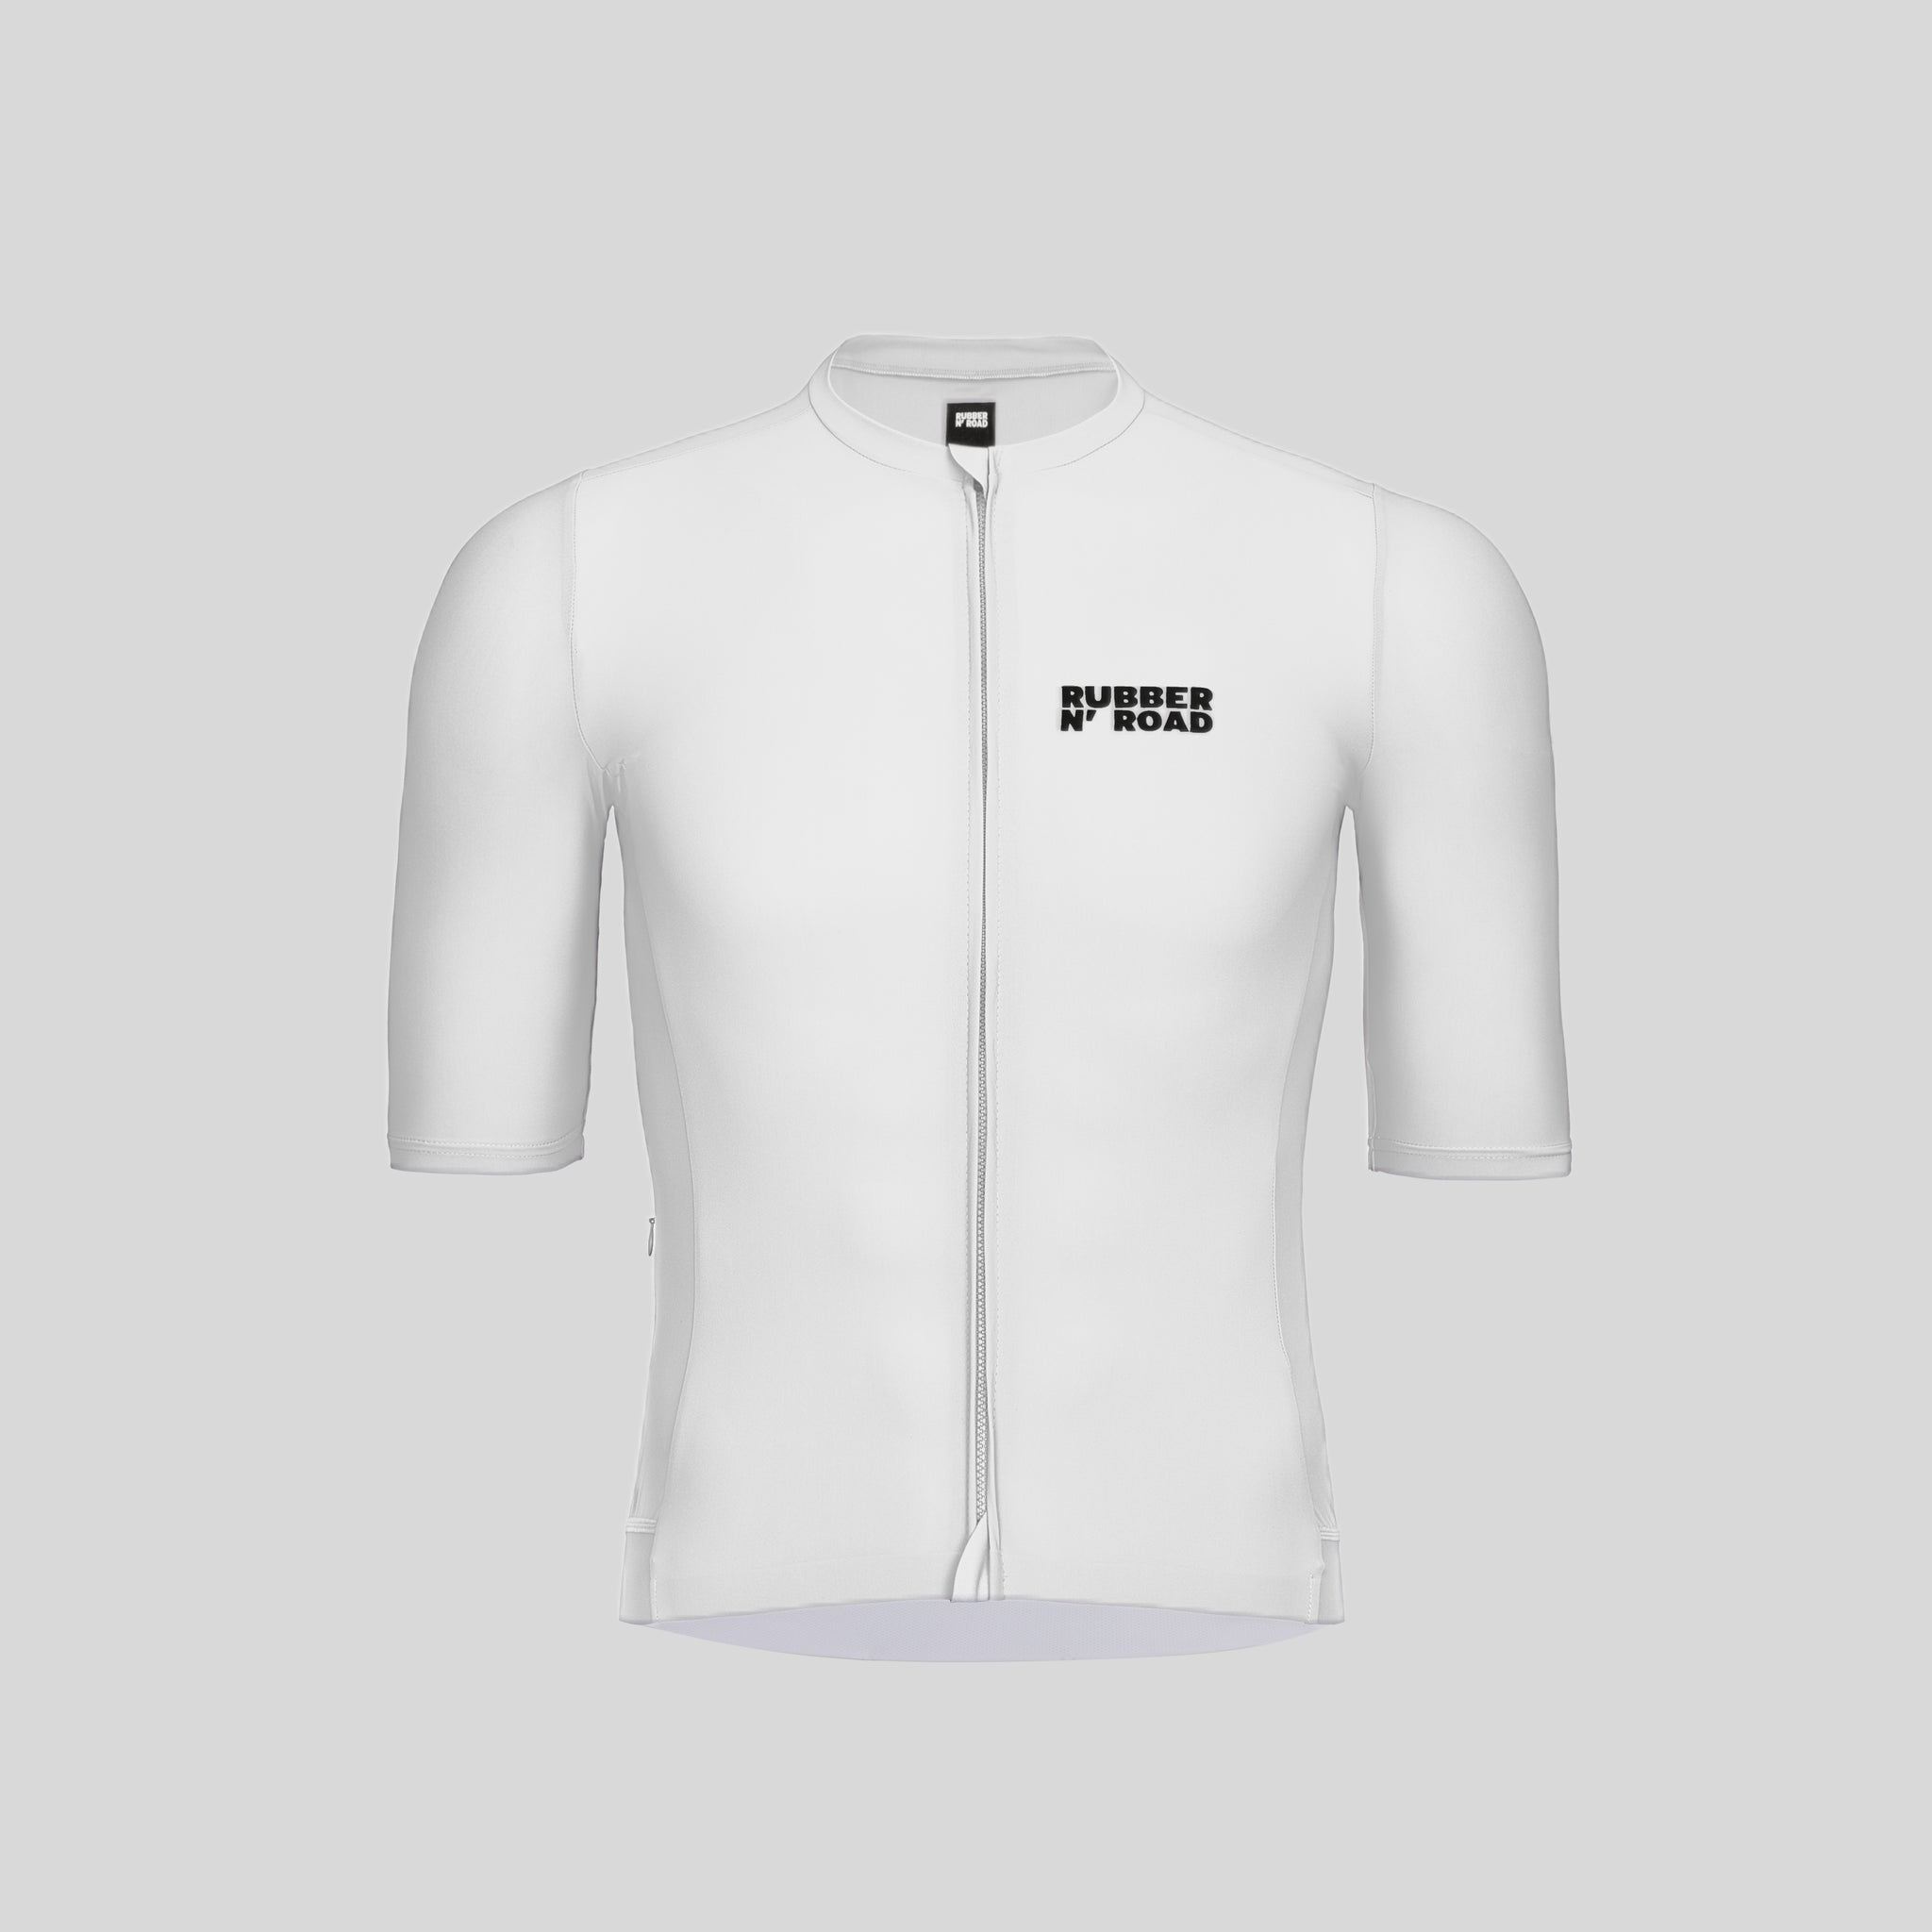 Men's Uniform Jersey - White